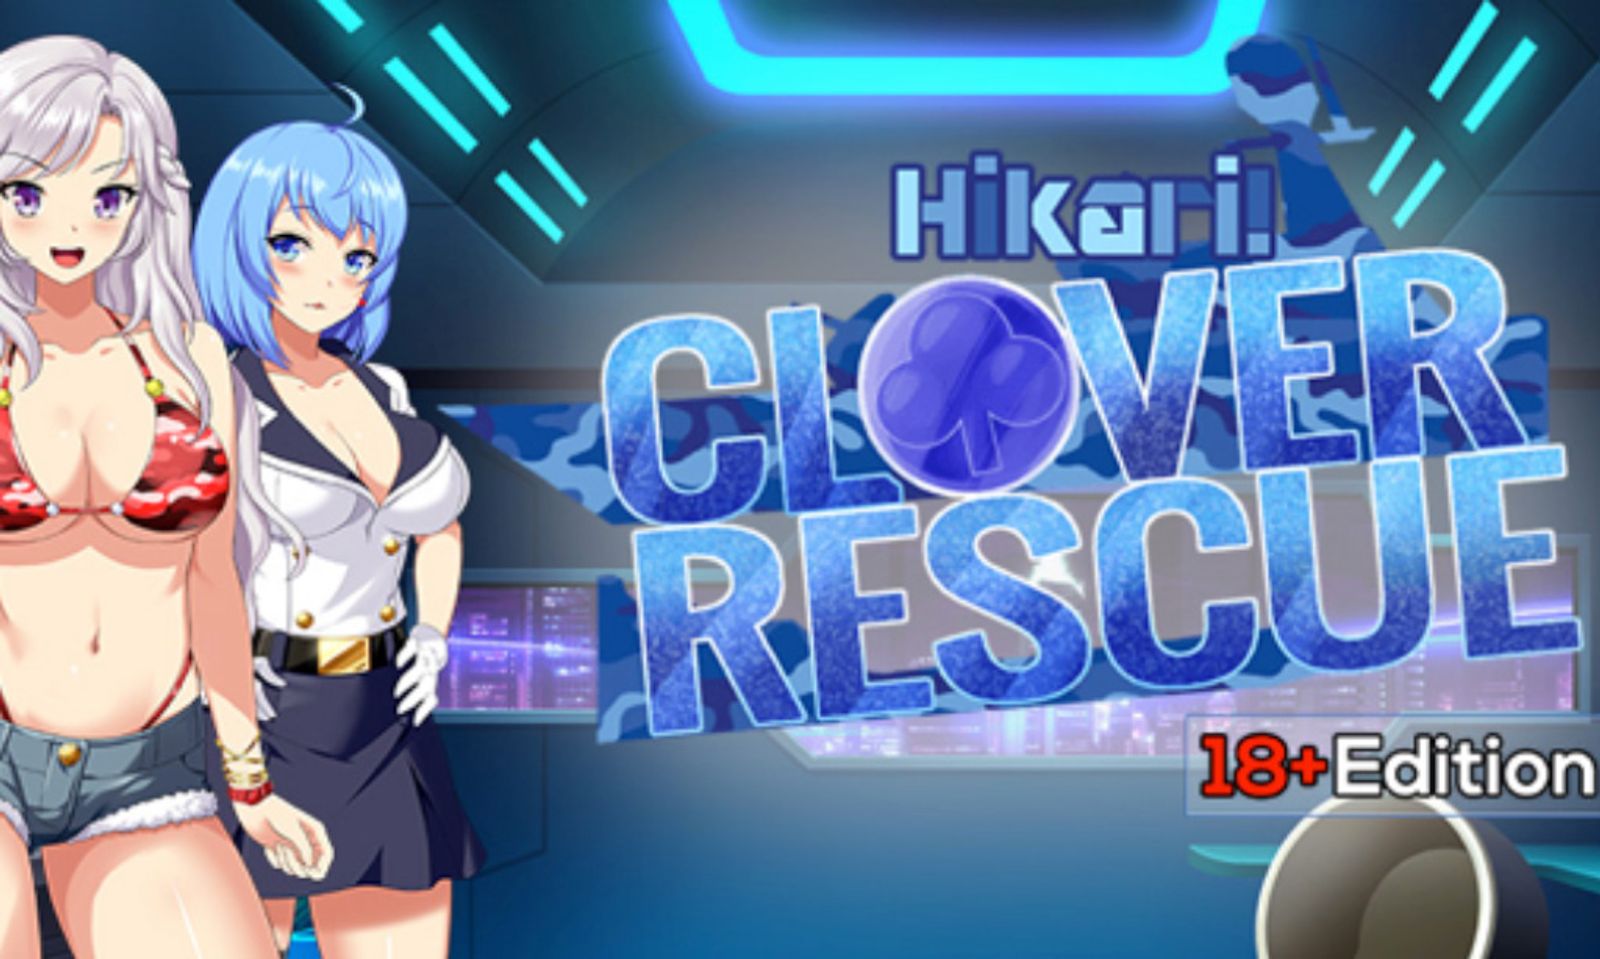 'Hikari! Clover Rescue' Out Now on Nutaku Platform